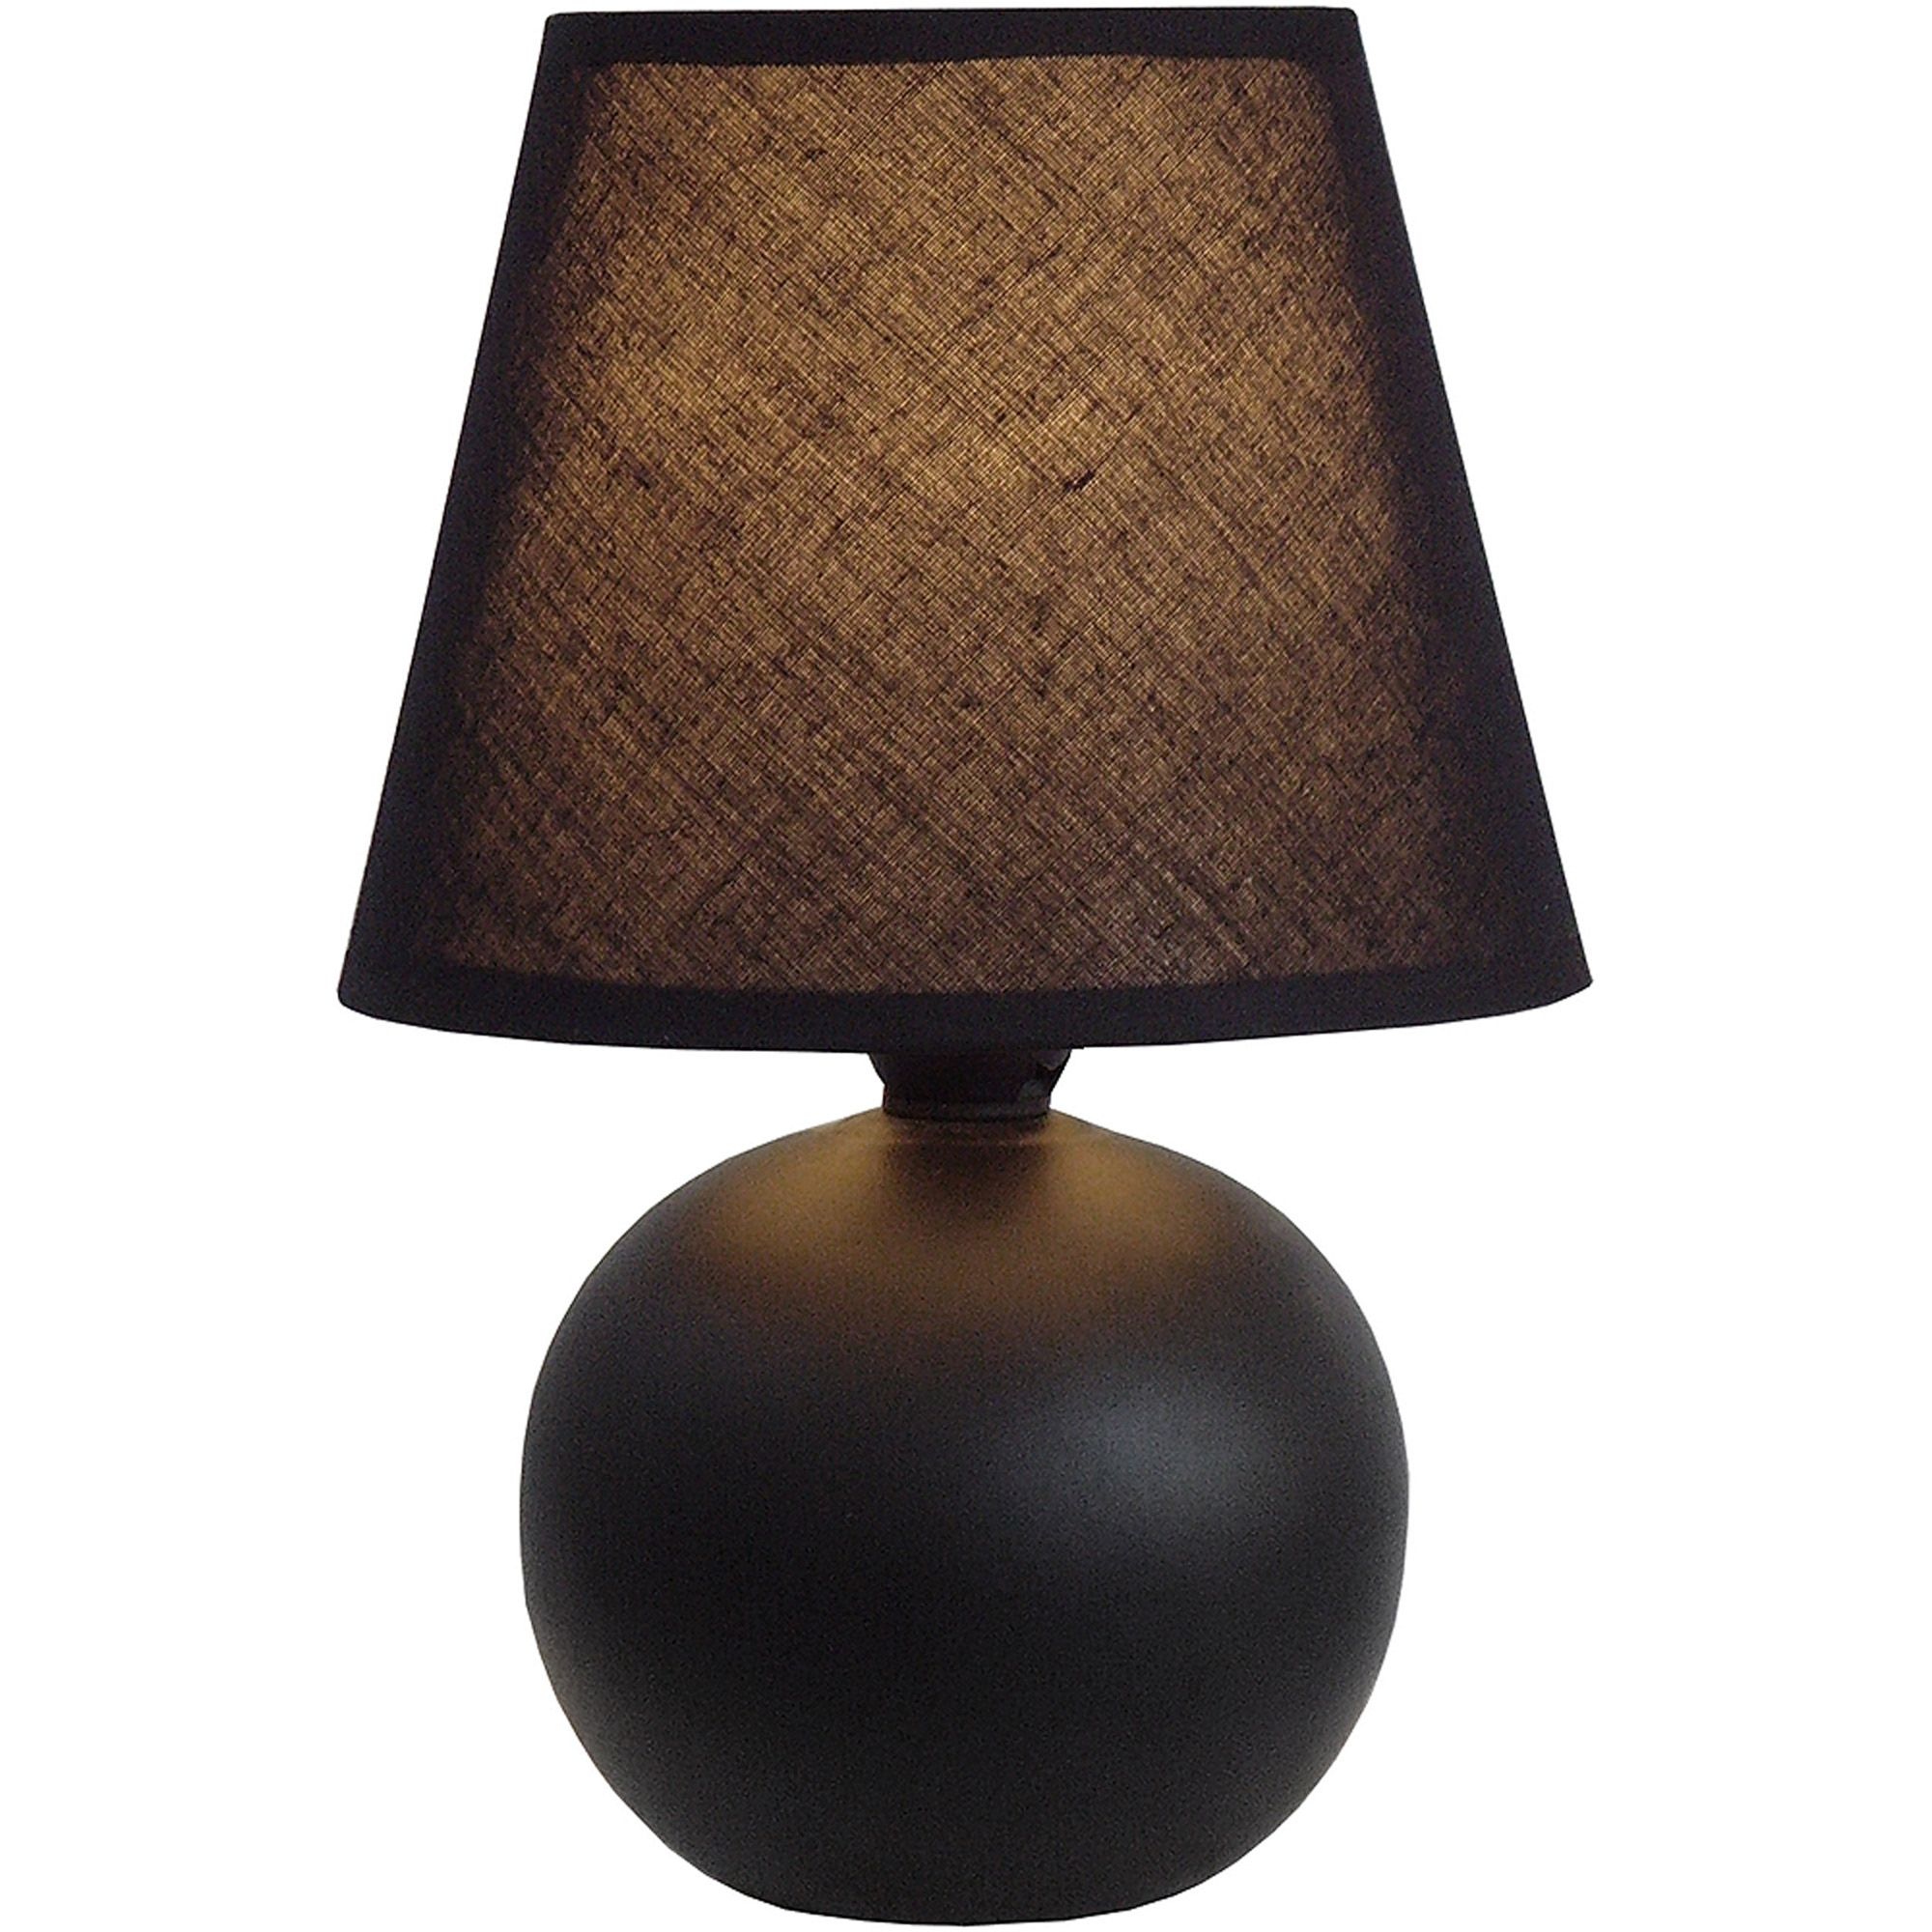 Simple Designs Mini Ceramic Globe Table Lamp, Black Pertaining To Walmart Living Room Table Lamps (Photo 3 of 15)